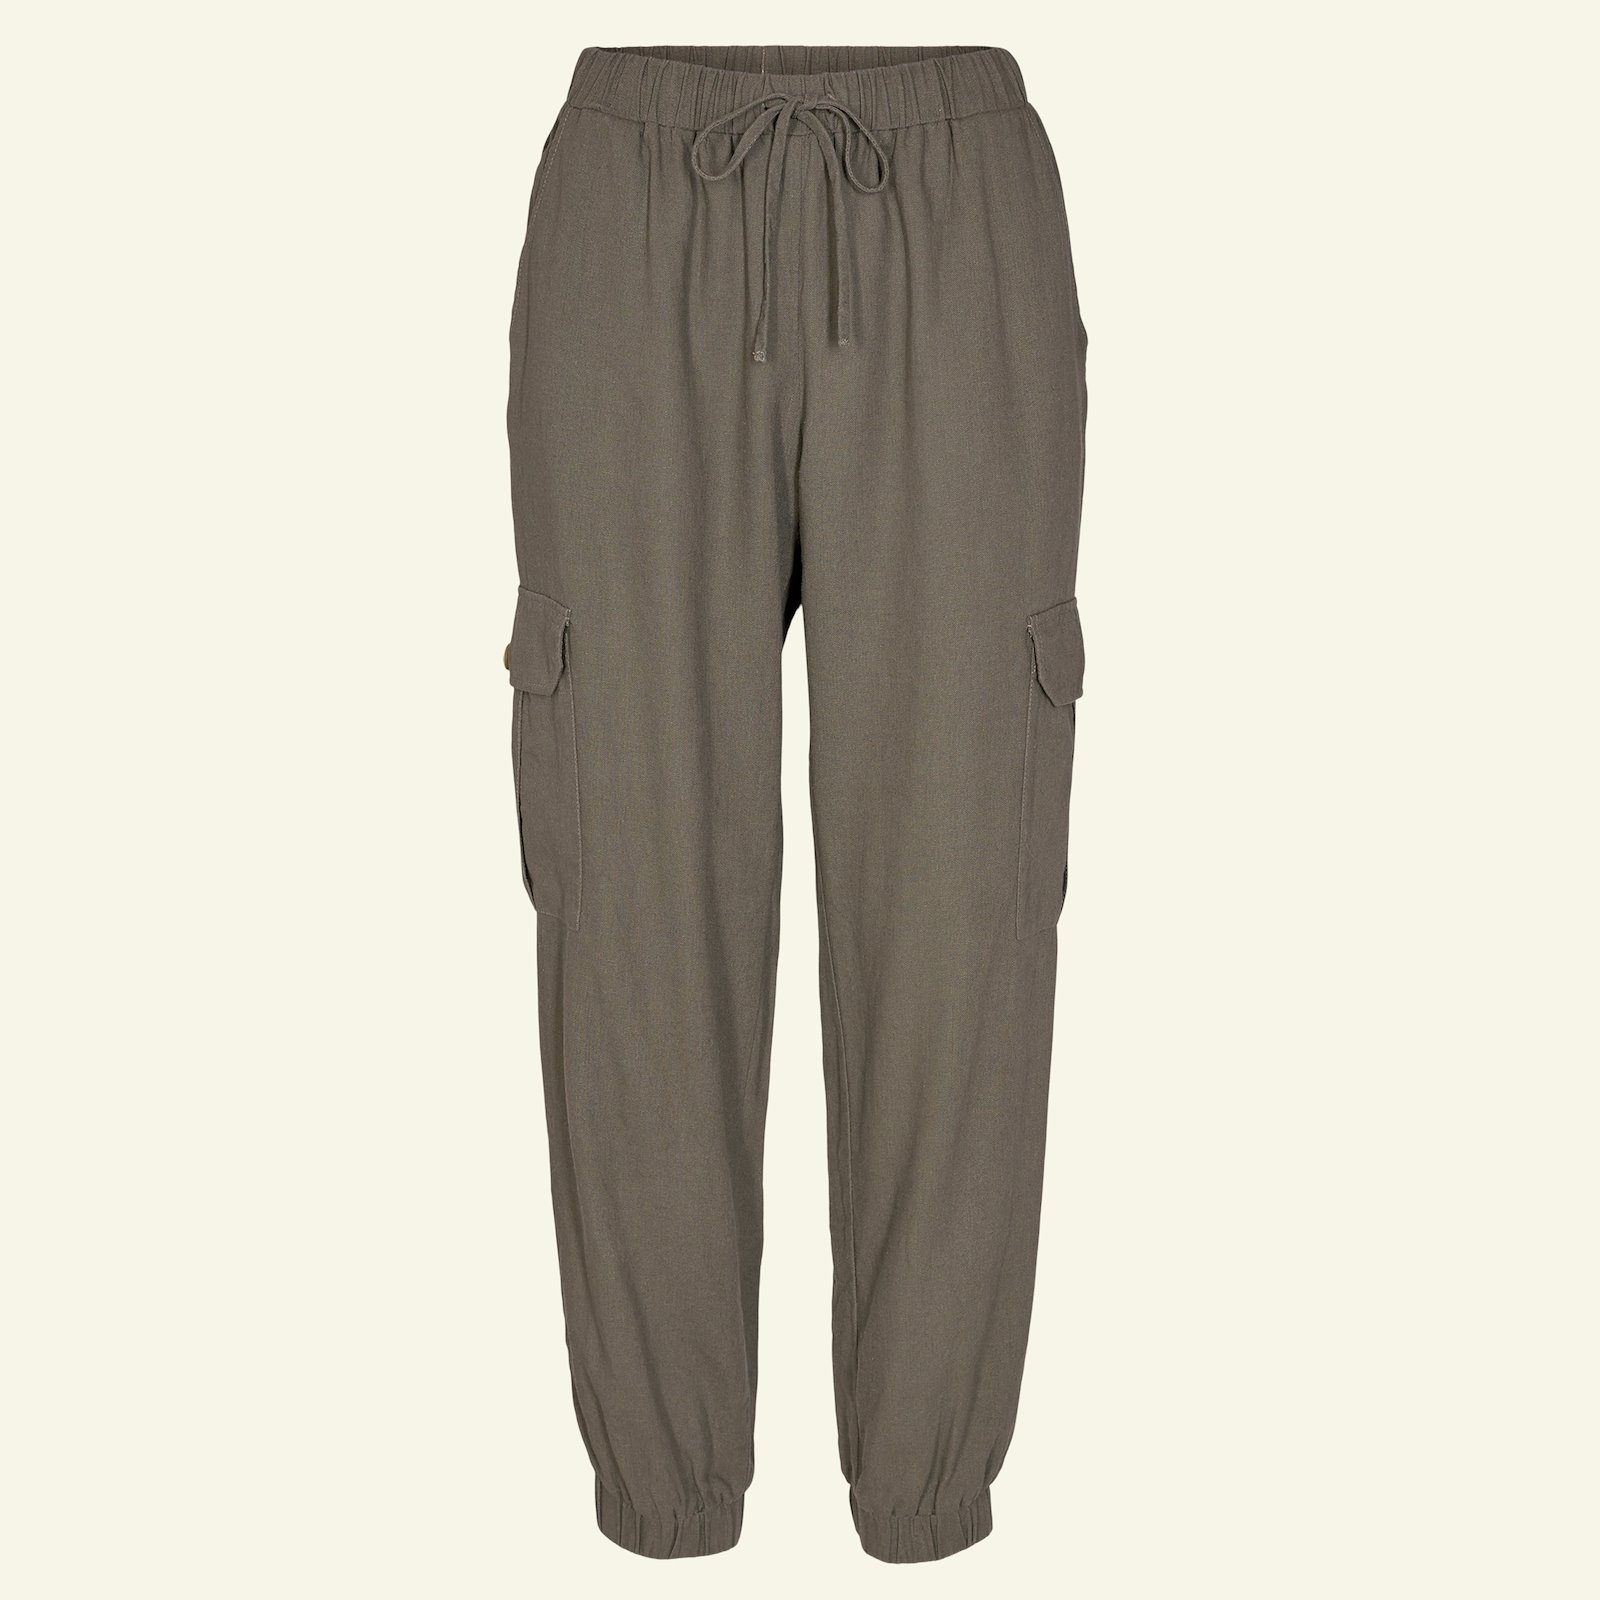 Cargo trousers, 36/8 p20054_510961_sskit